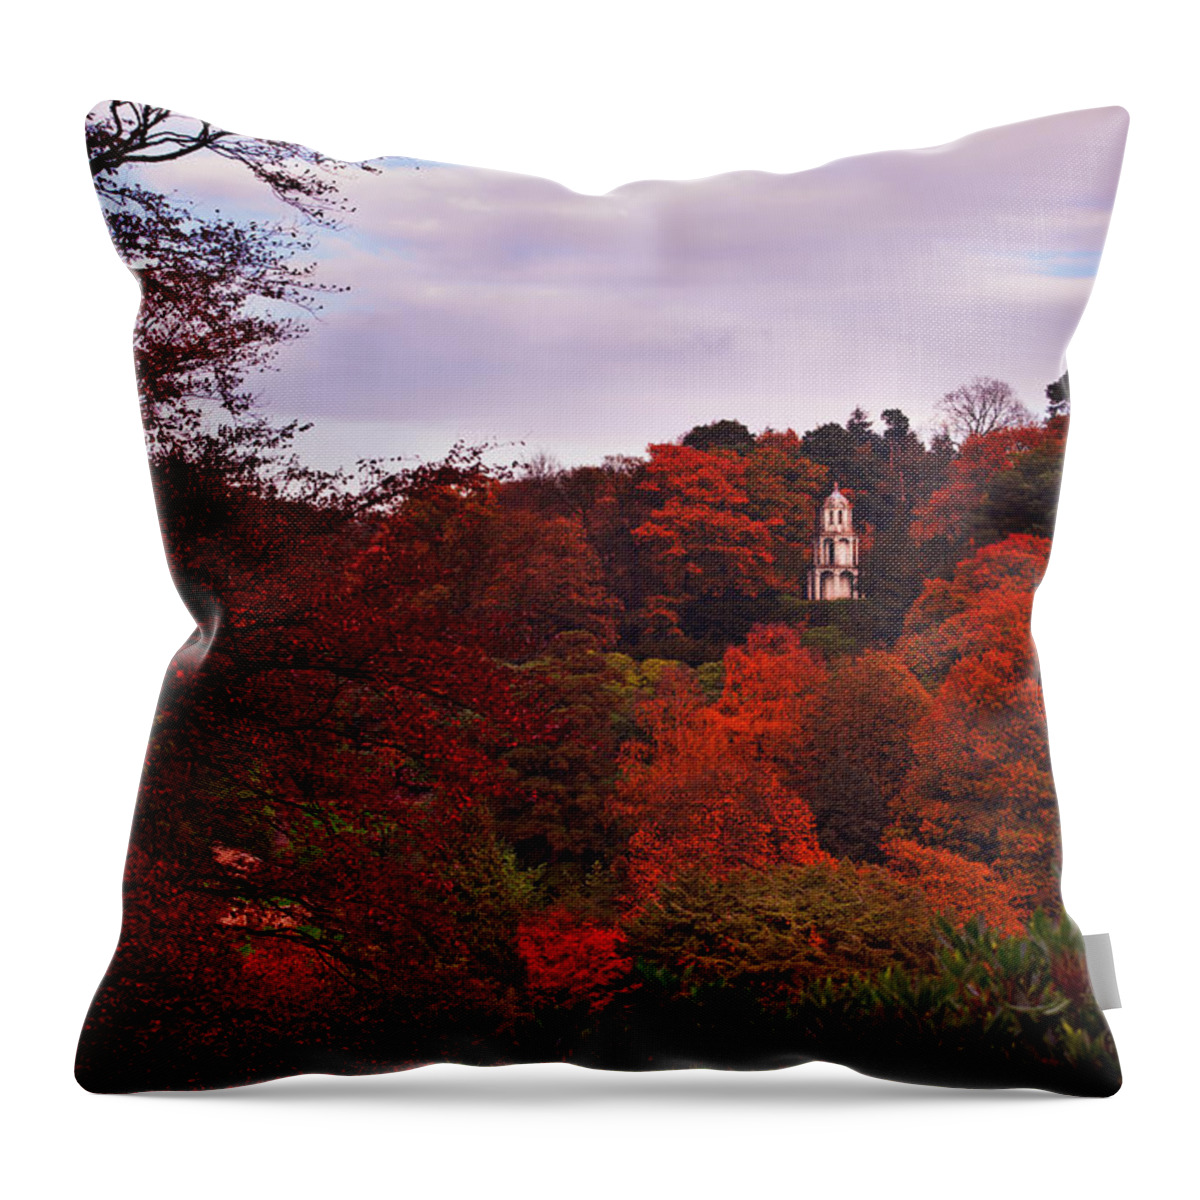 Paogoda Throw Pillow featuring the photograph Autumn Pagoda by B Cash